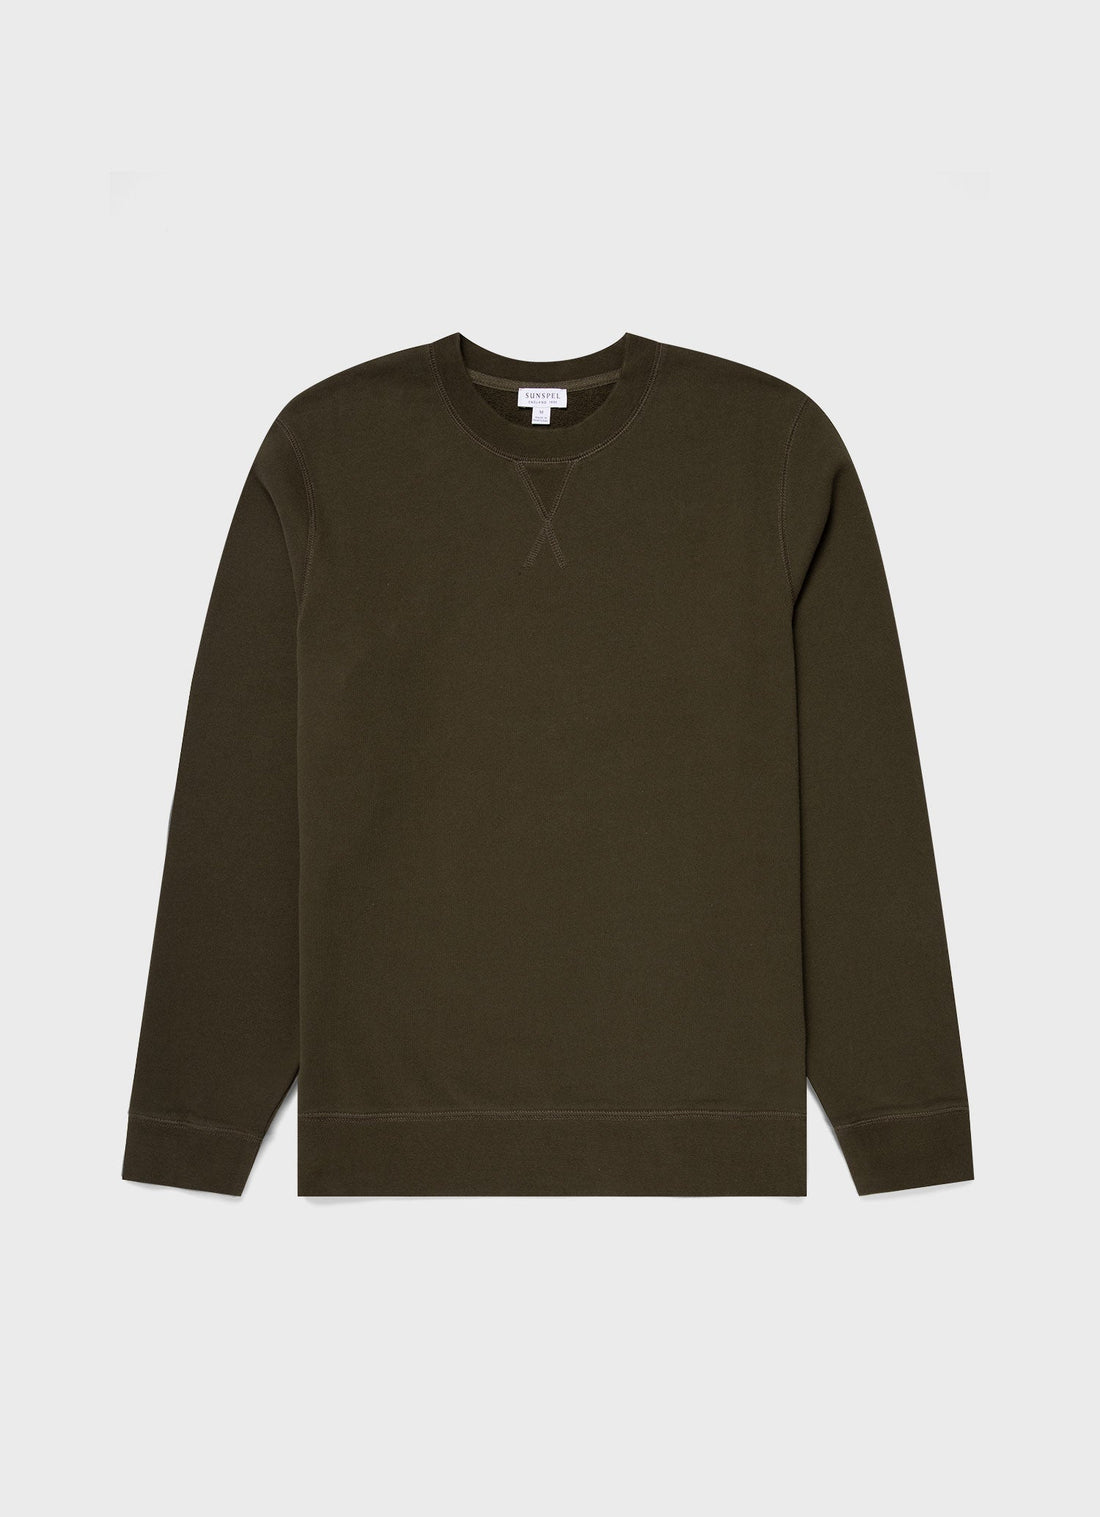 Men's Loopback Sweatshirt in Dark Olive